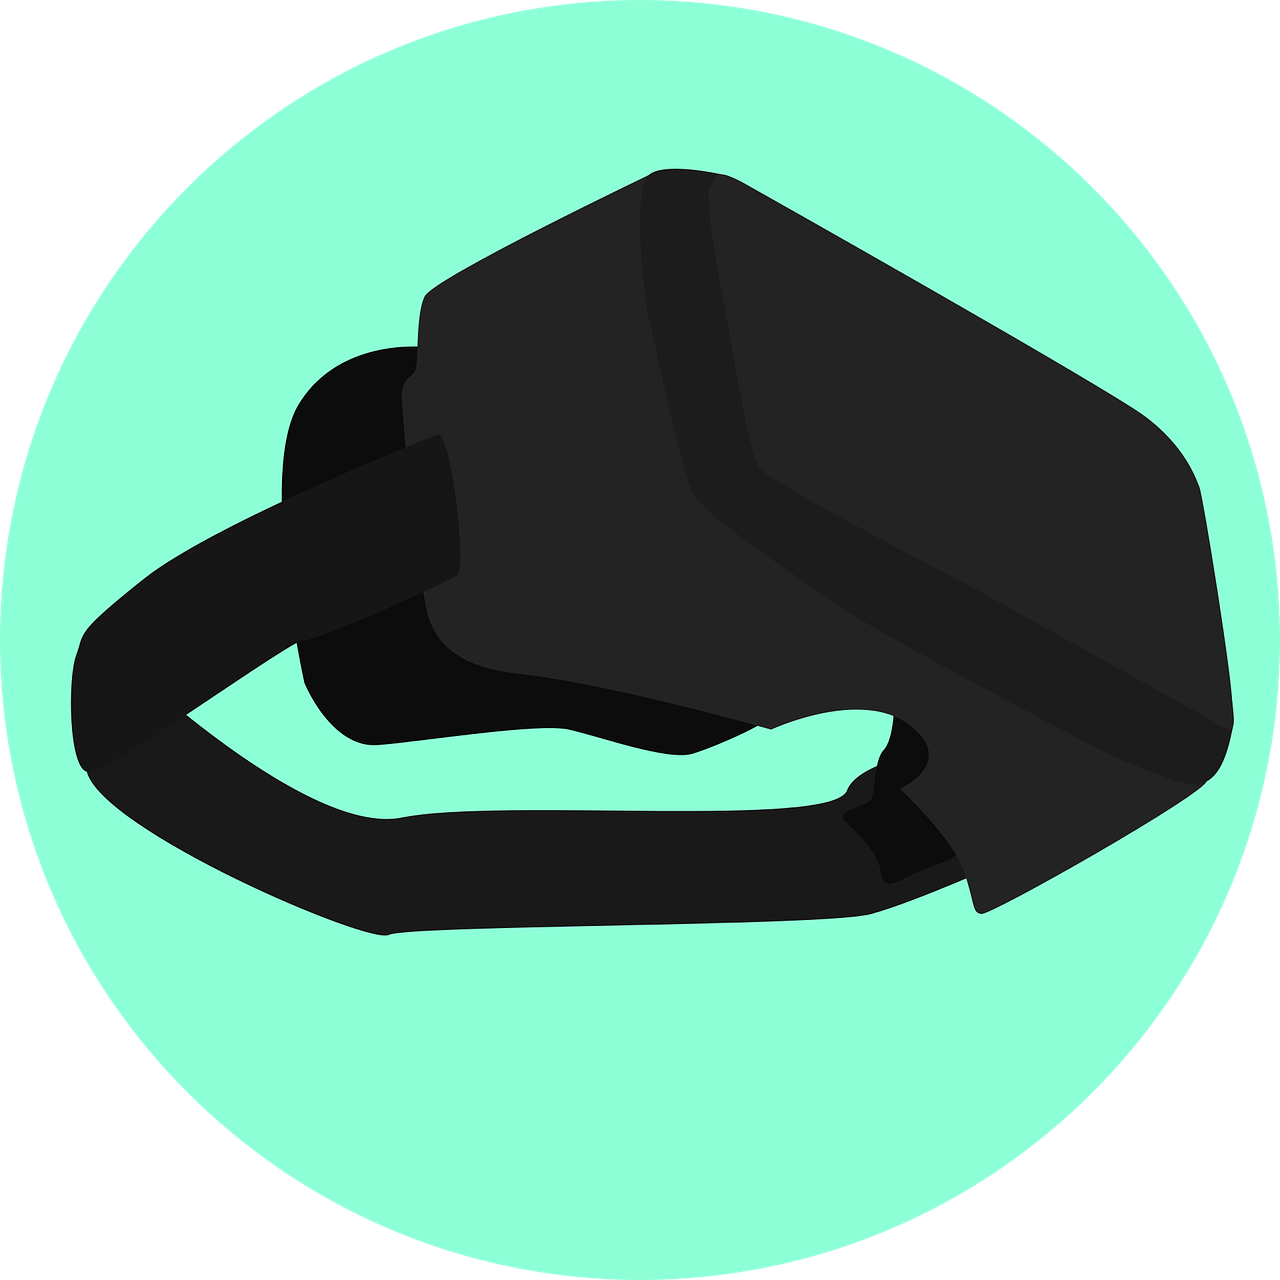 VR очки вектор. Виртуальная реальность значок. Шлем виртуальной реальности иконка. Шлем виртуальной реальности без фона. Виар чат аватары